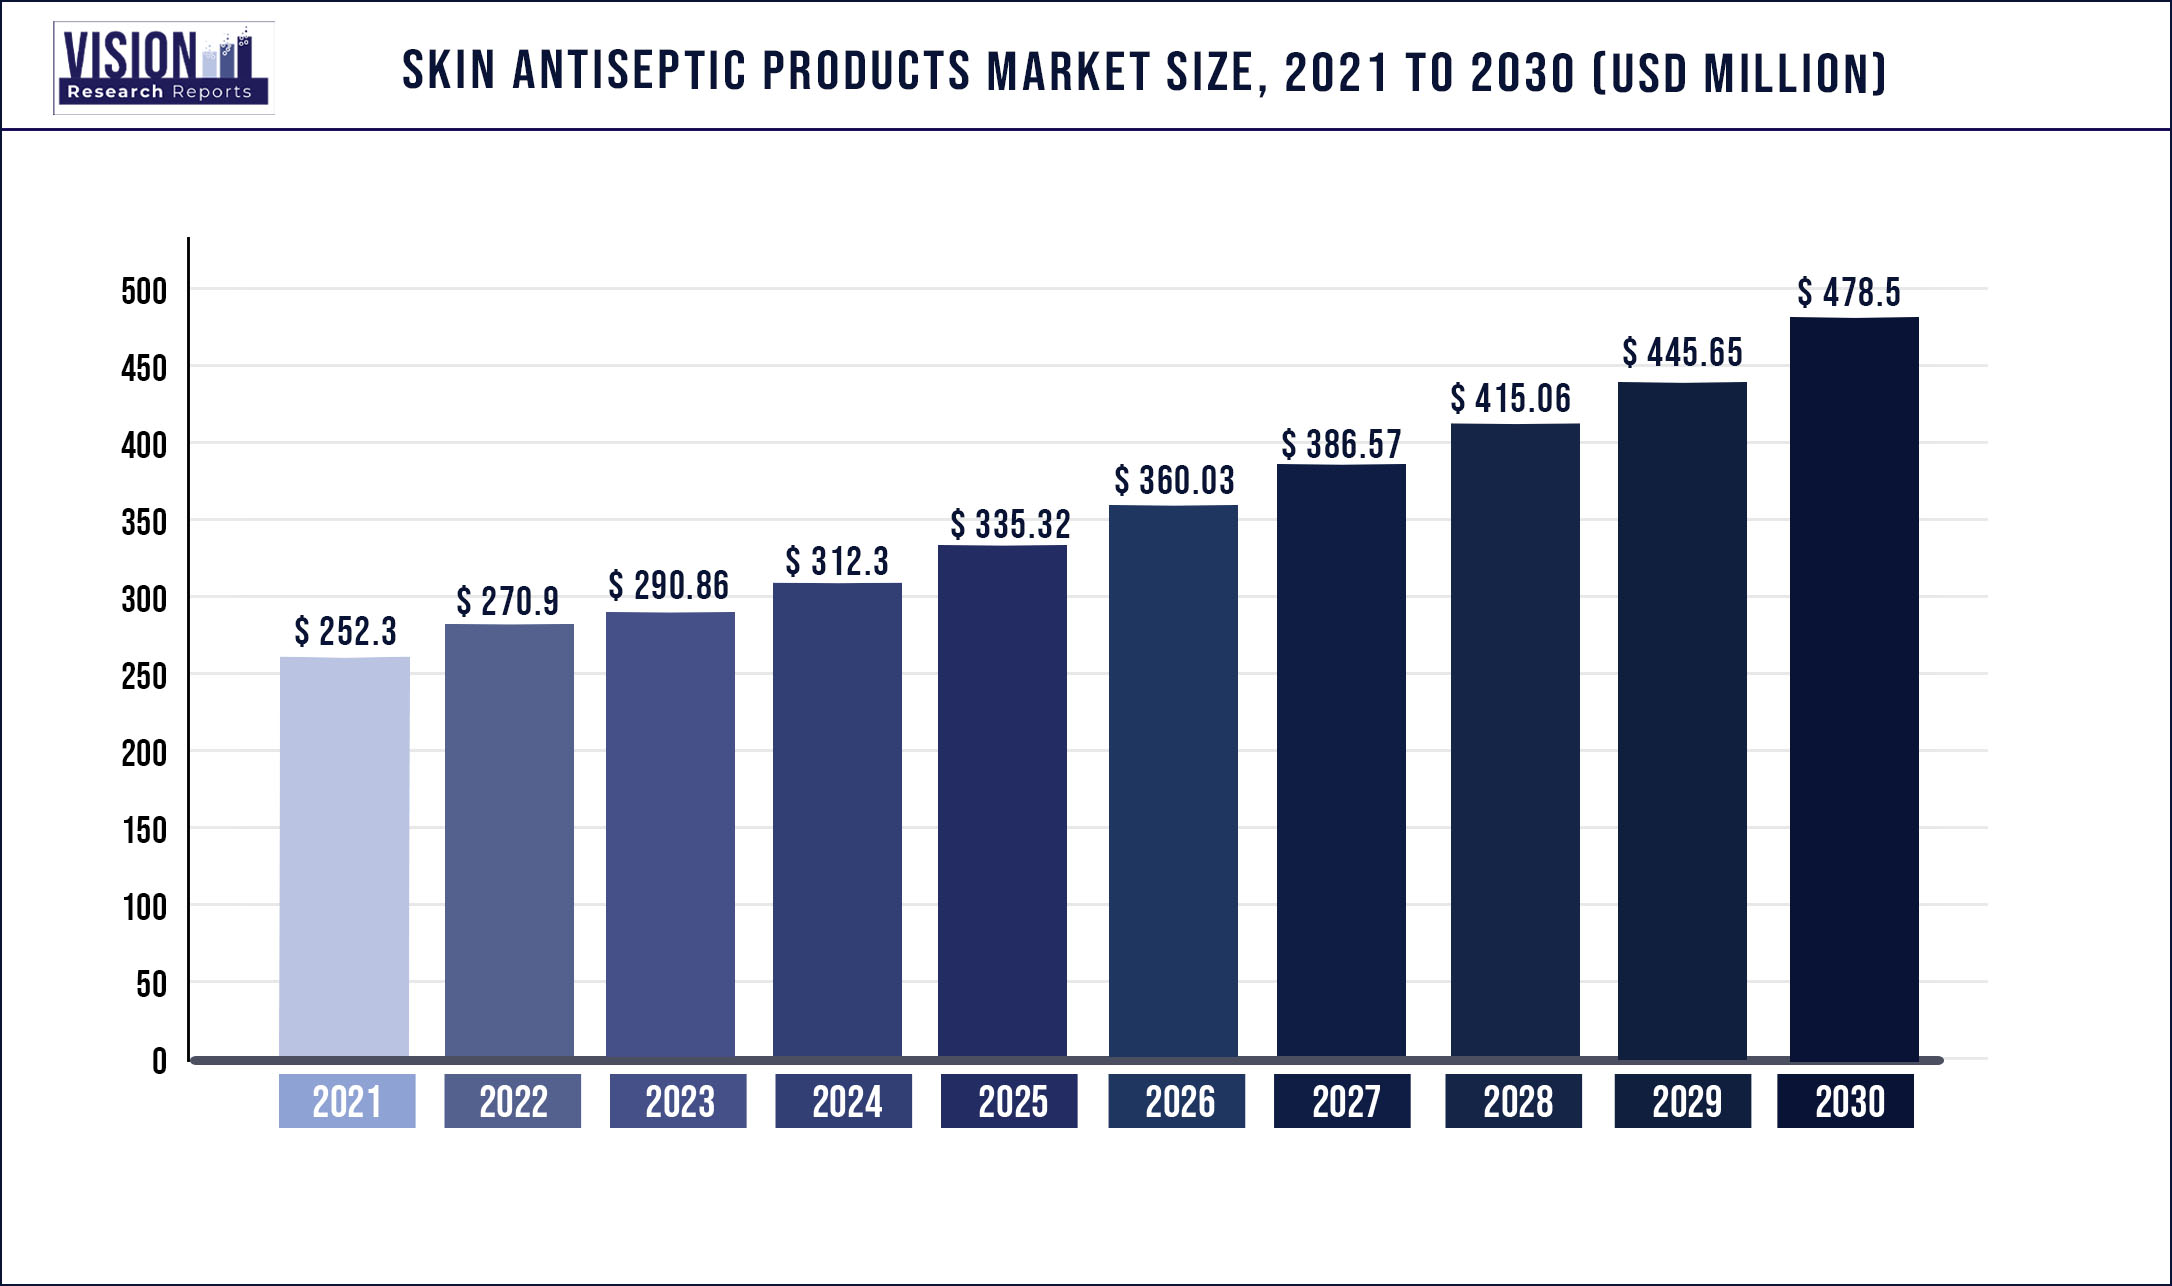 Skin Antiseptic Products Market Size 2021 to 2030